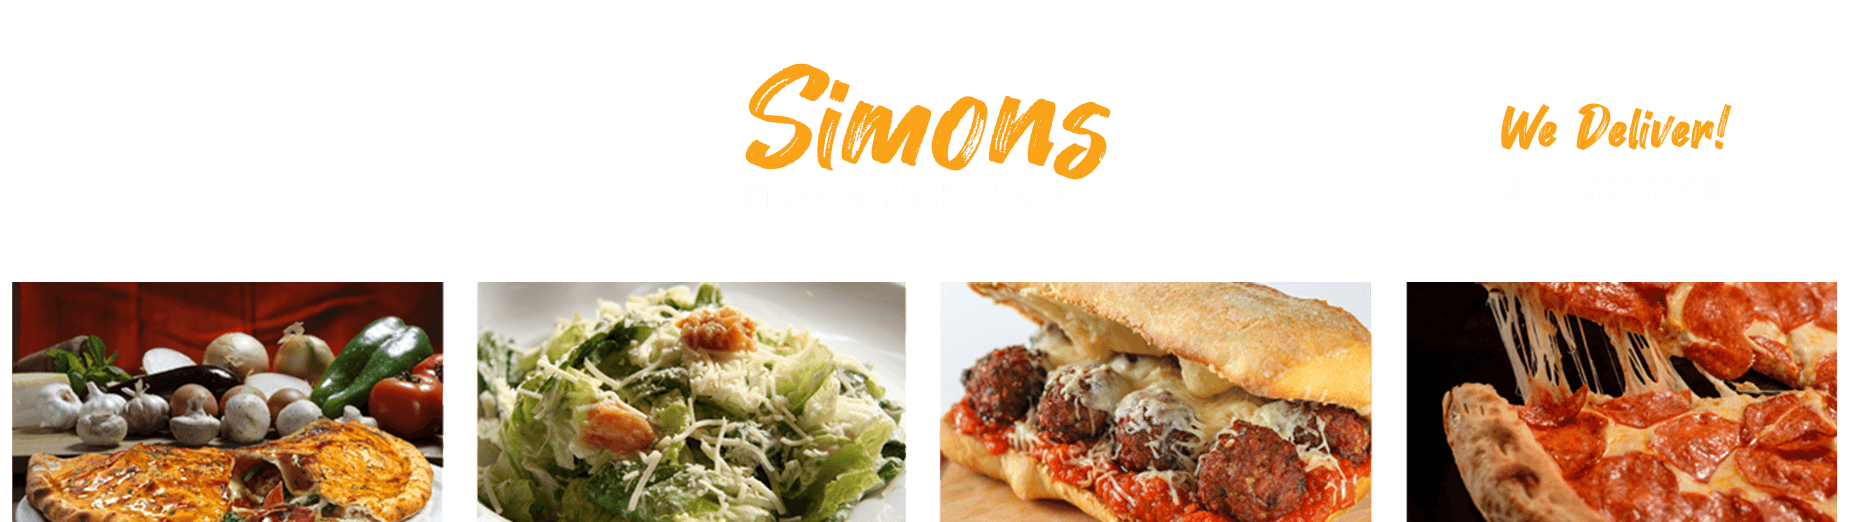 Simon's Pizza & Roast Beef